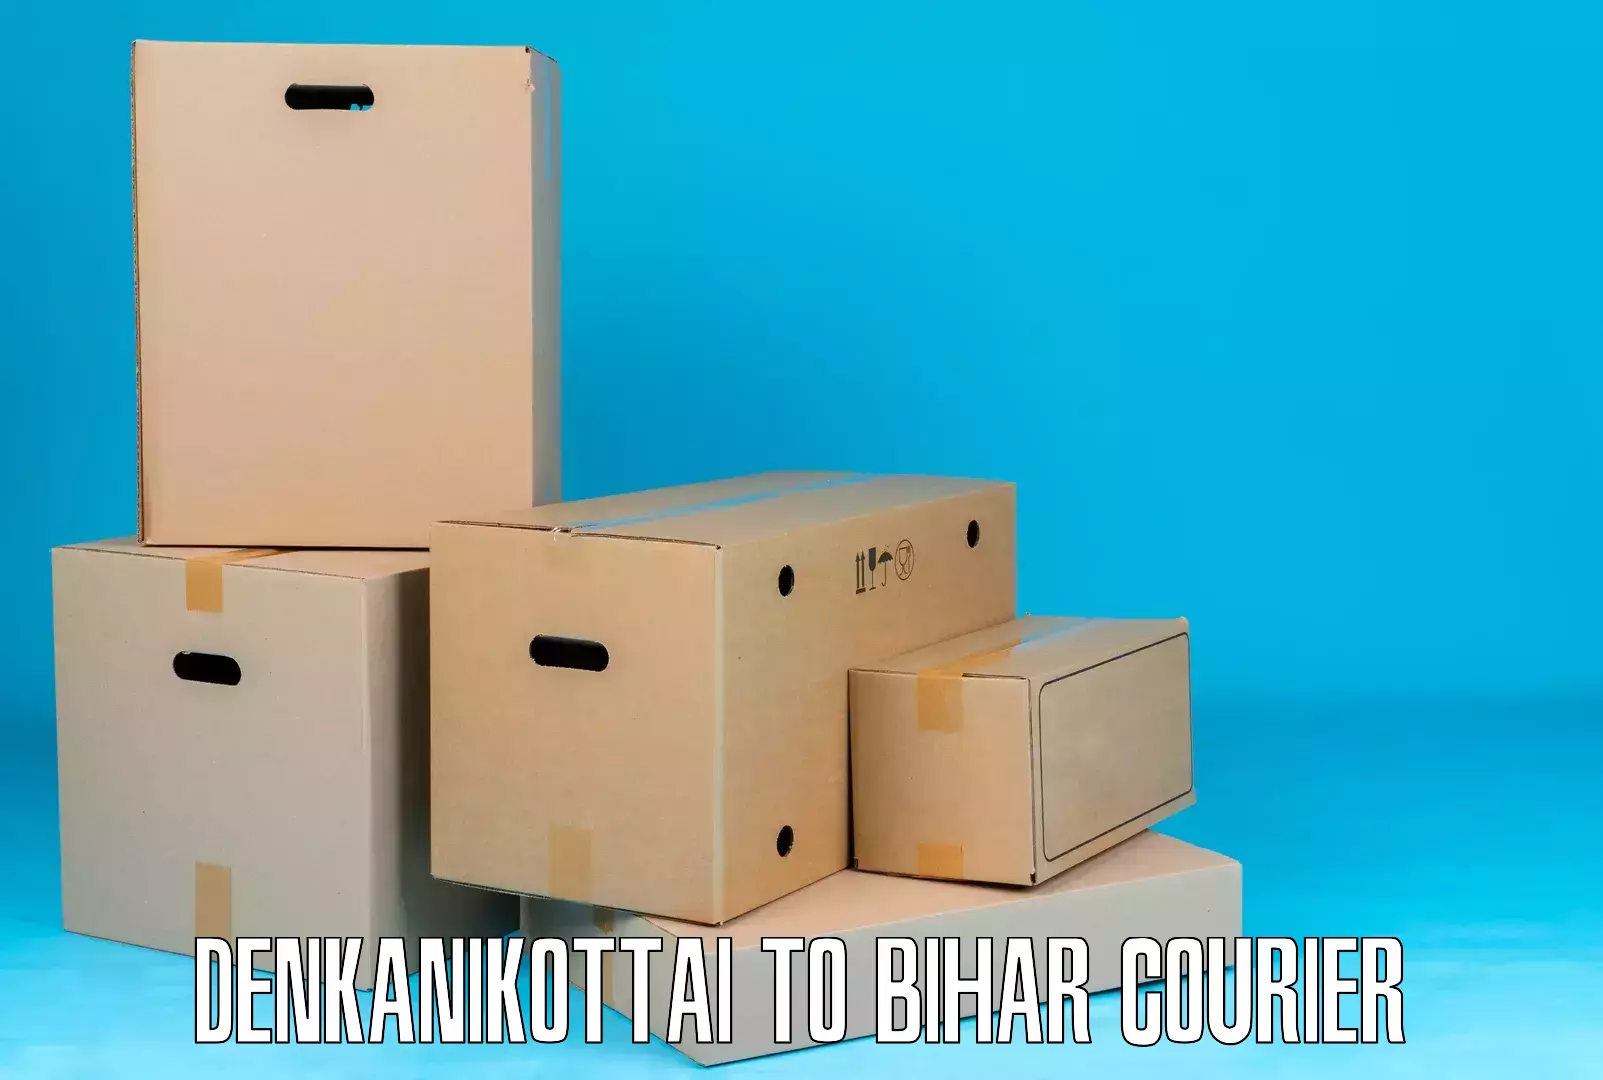 High-capacity courier solutions Denkanikottai to Thakurganj